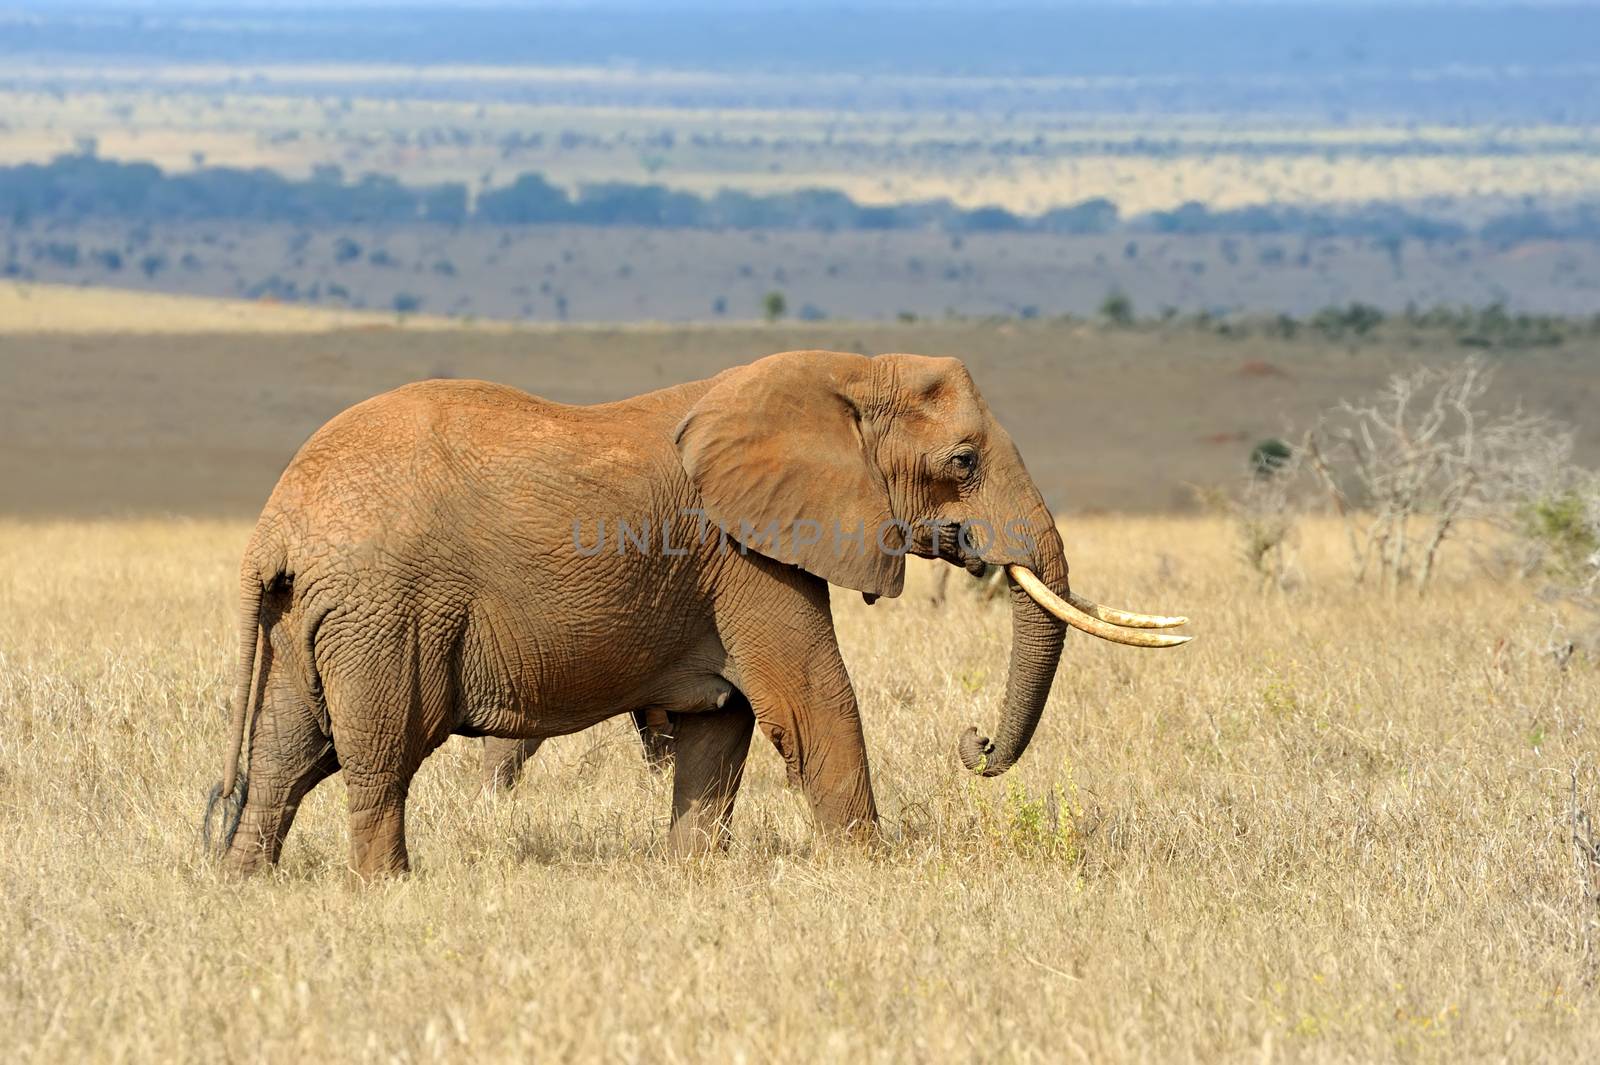 Elephant on savannah in Africa by byrdyak